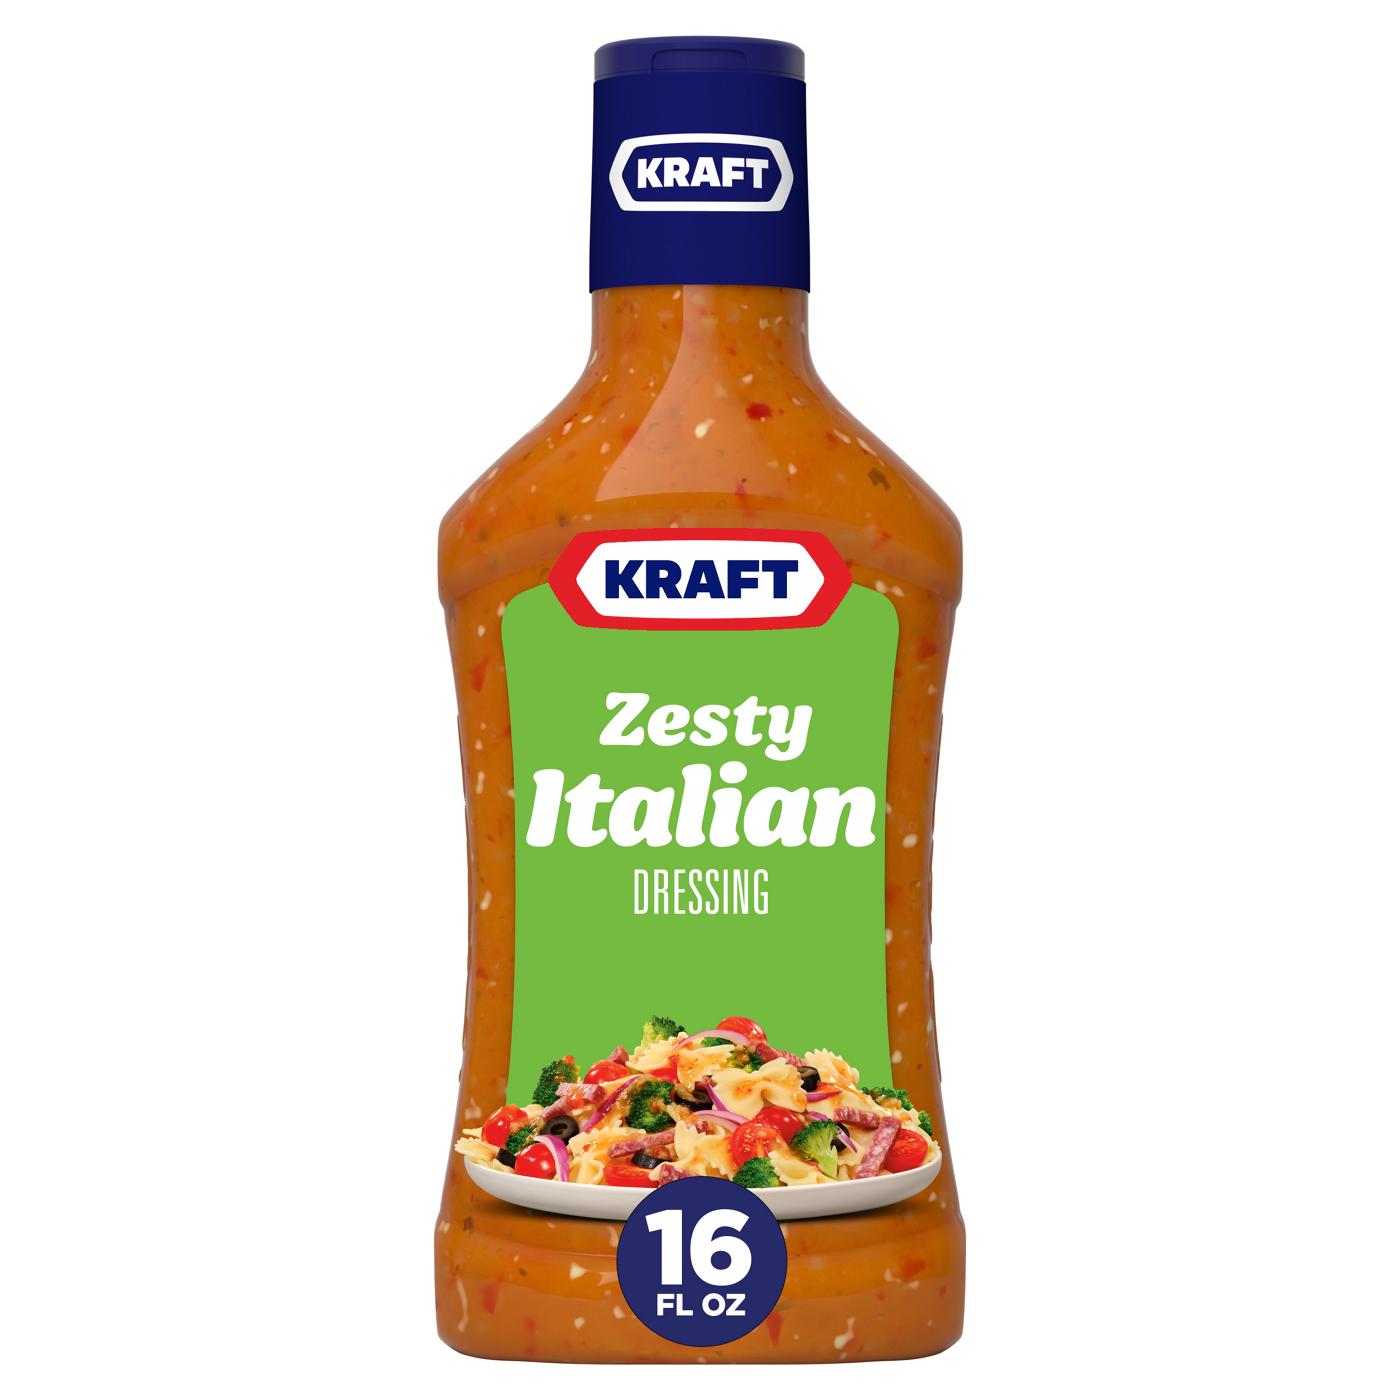 Kraft Zesty Italian Dressing; image 1 of 2